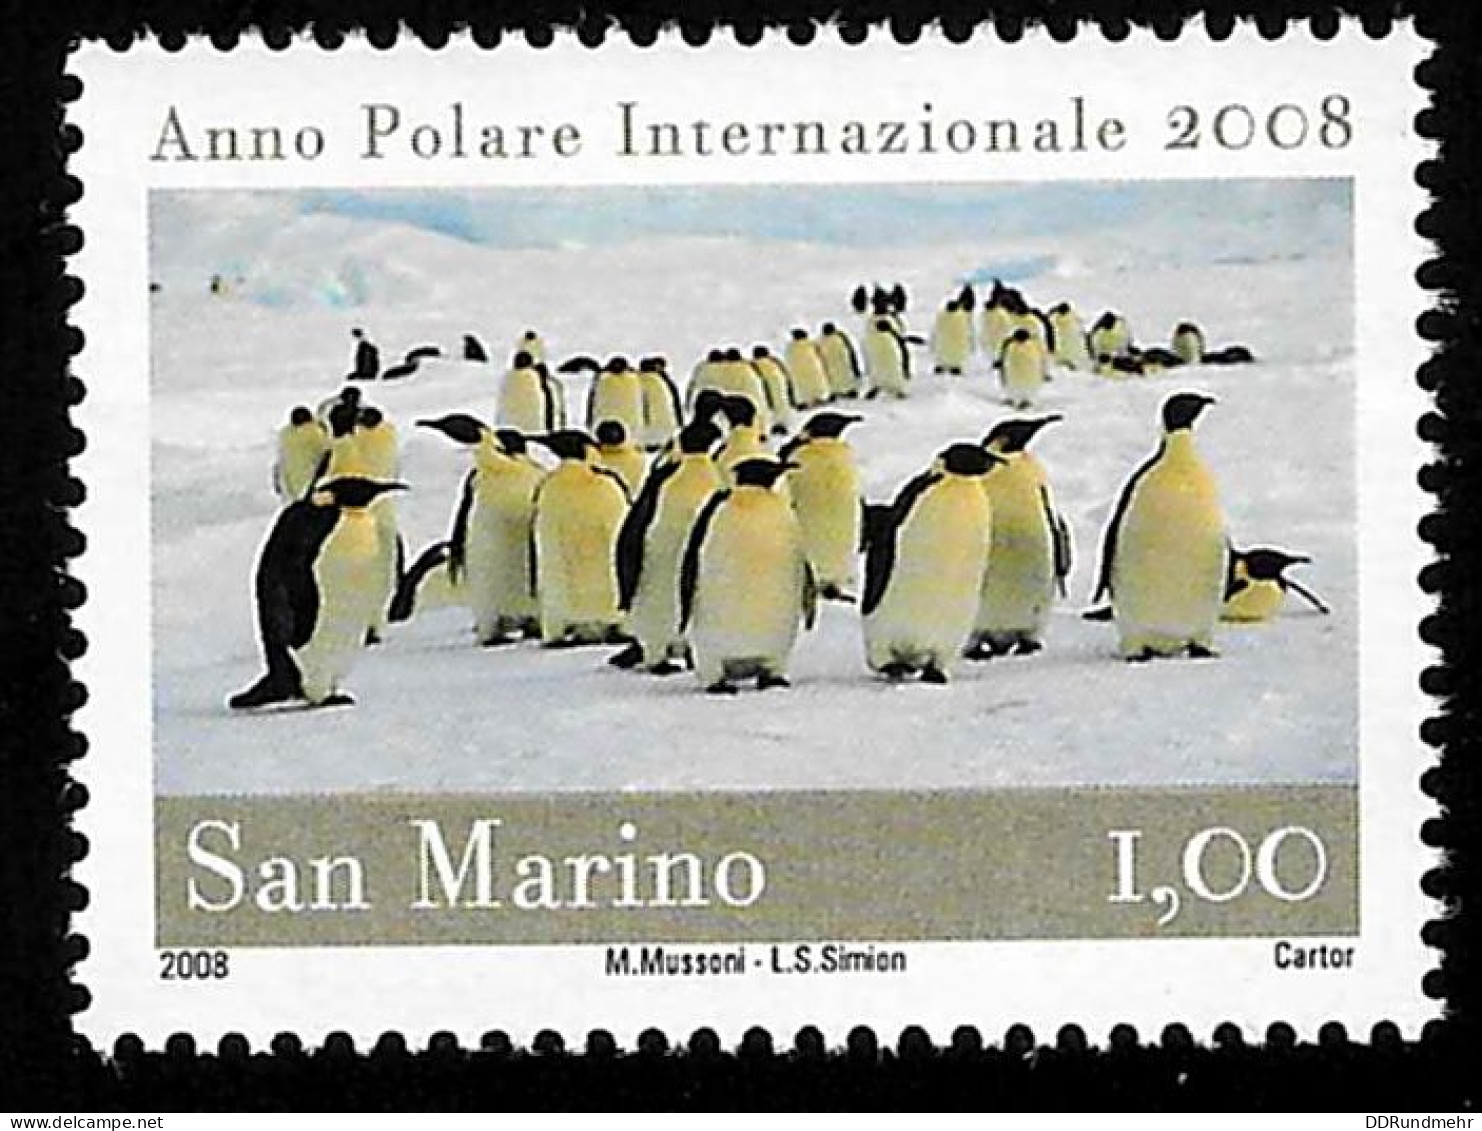 2008 Polar Year Michel SM 2359 Stamp Number SM 1769 Yvert Et Tellier SM 2152 Stanley Gibbons SM 2185 Xx MNH - Nuovi